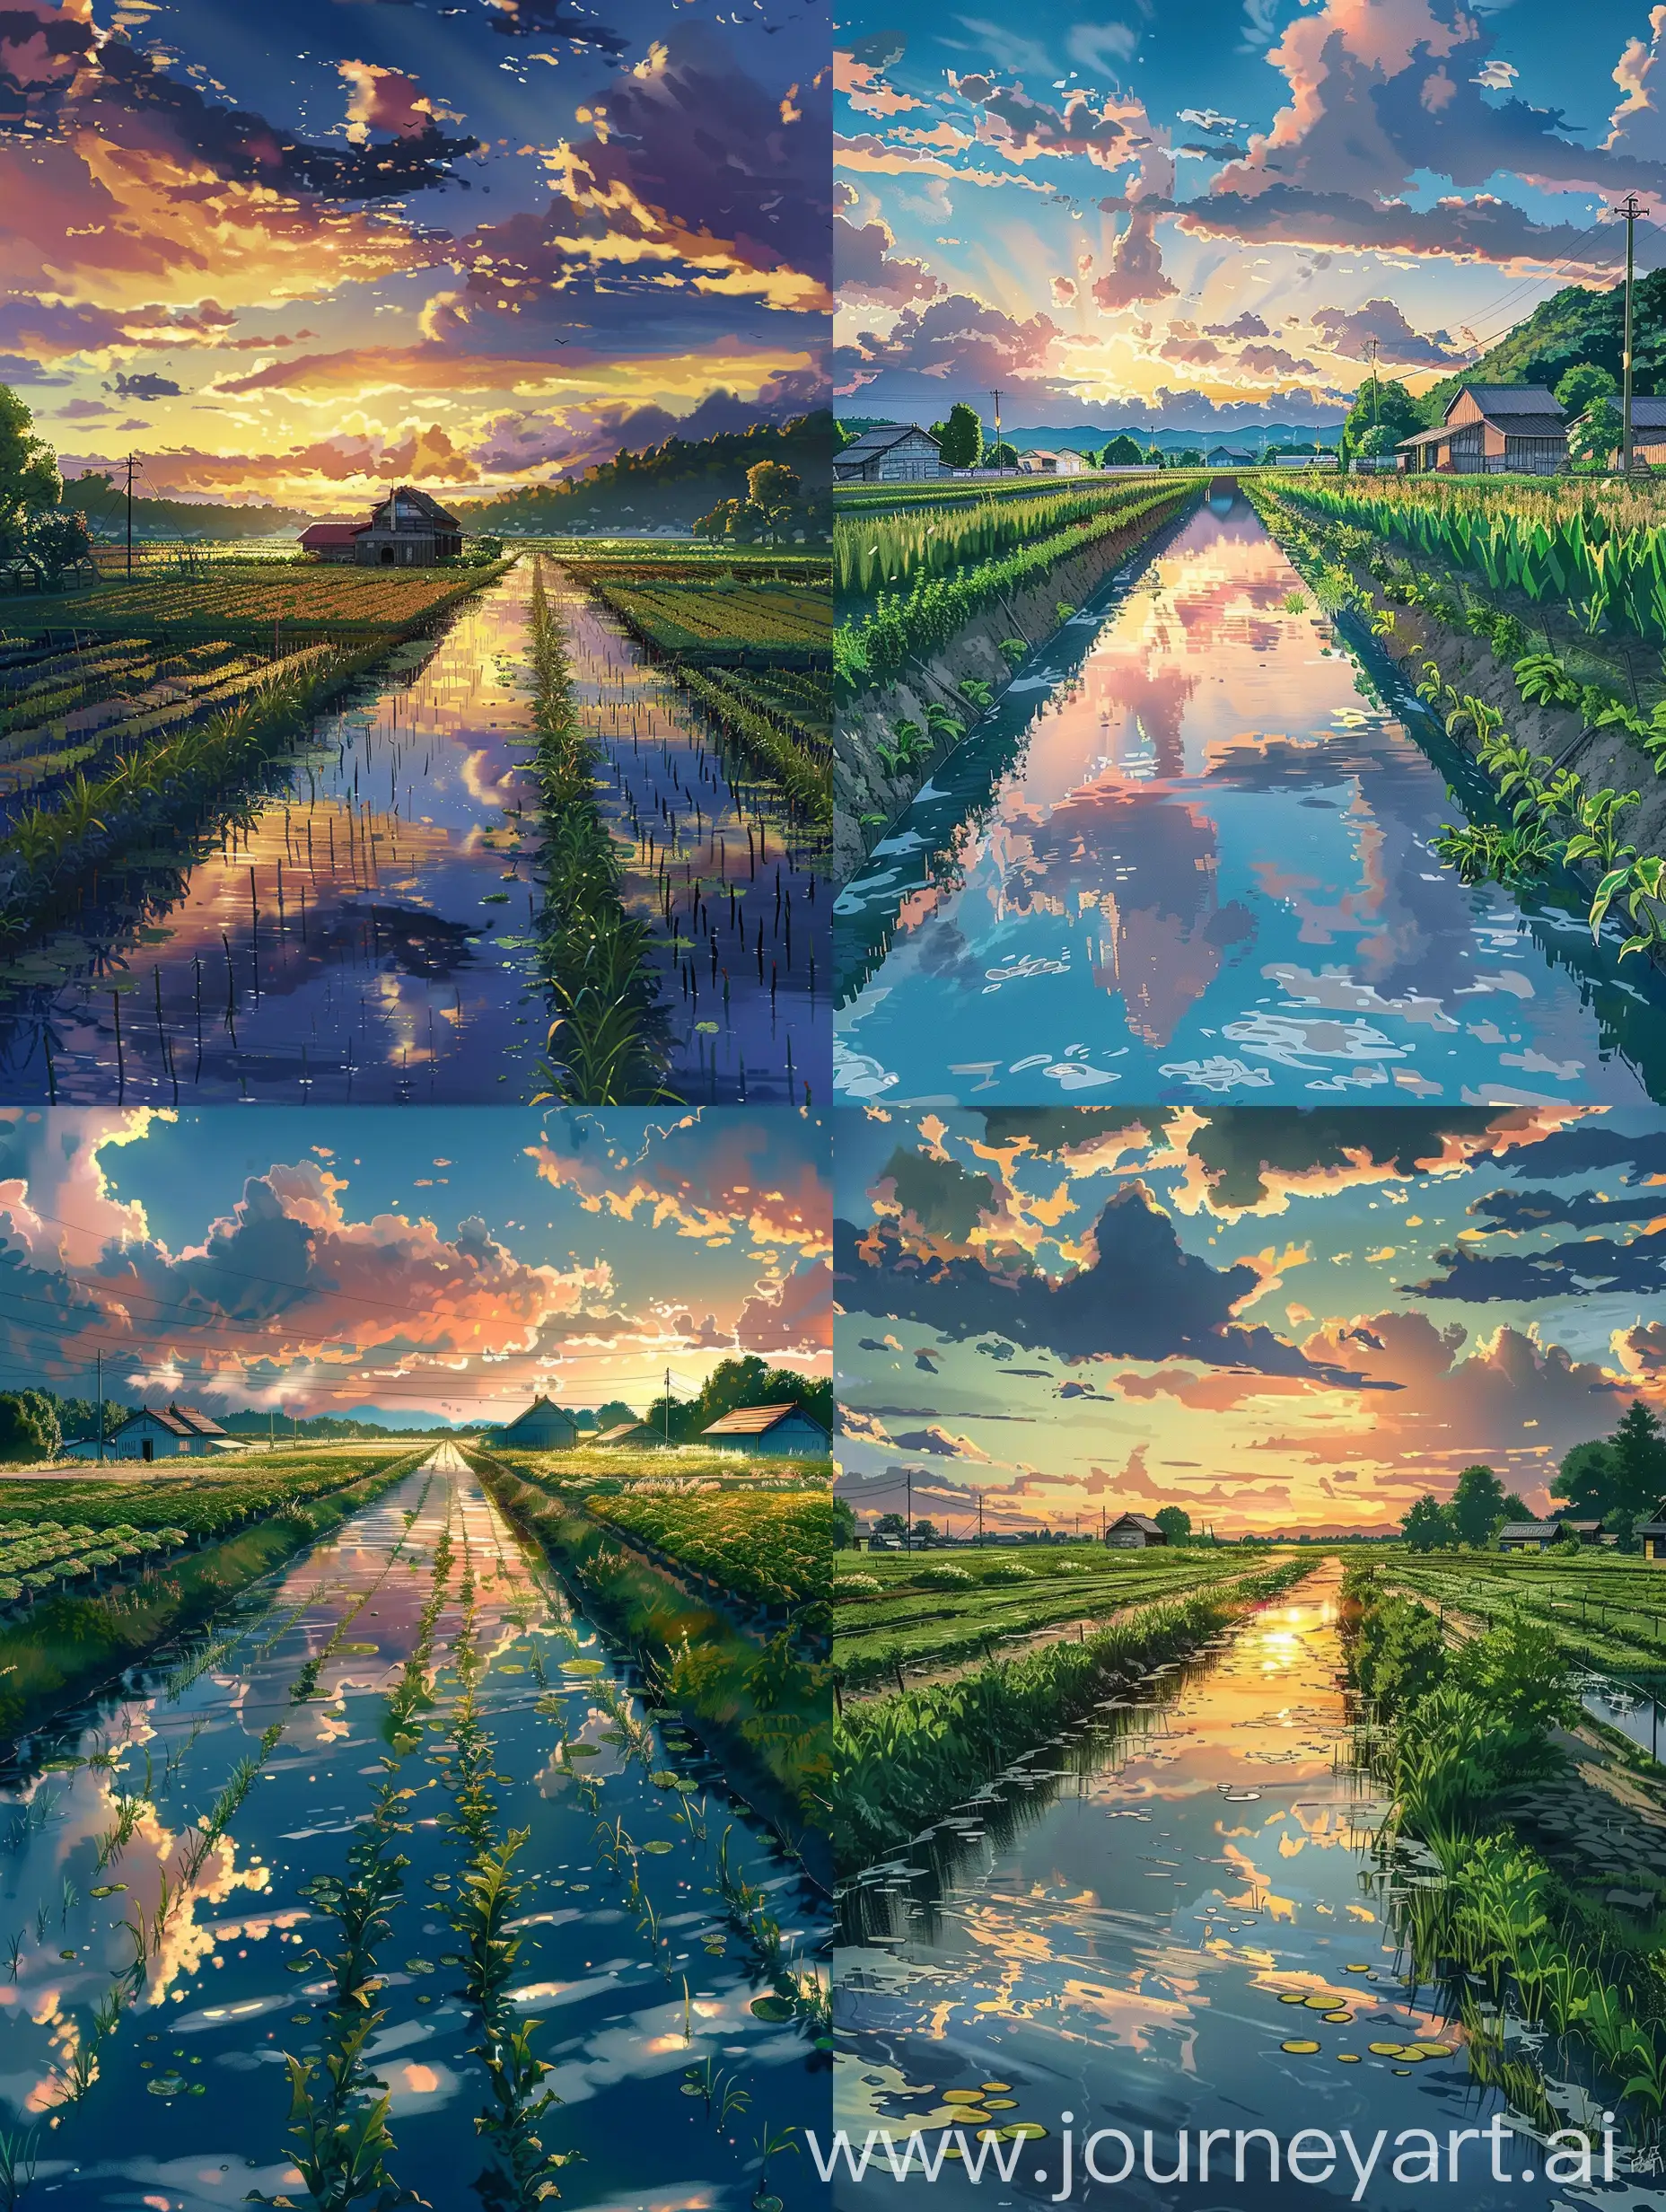 Beautiful anime scenary, mokoto shinkai style, water between the small crops,farms,a small farm house,beautiful sky,water refletcions,countryside,sereneity,summers.